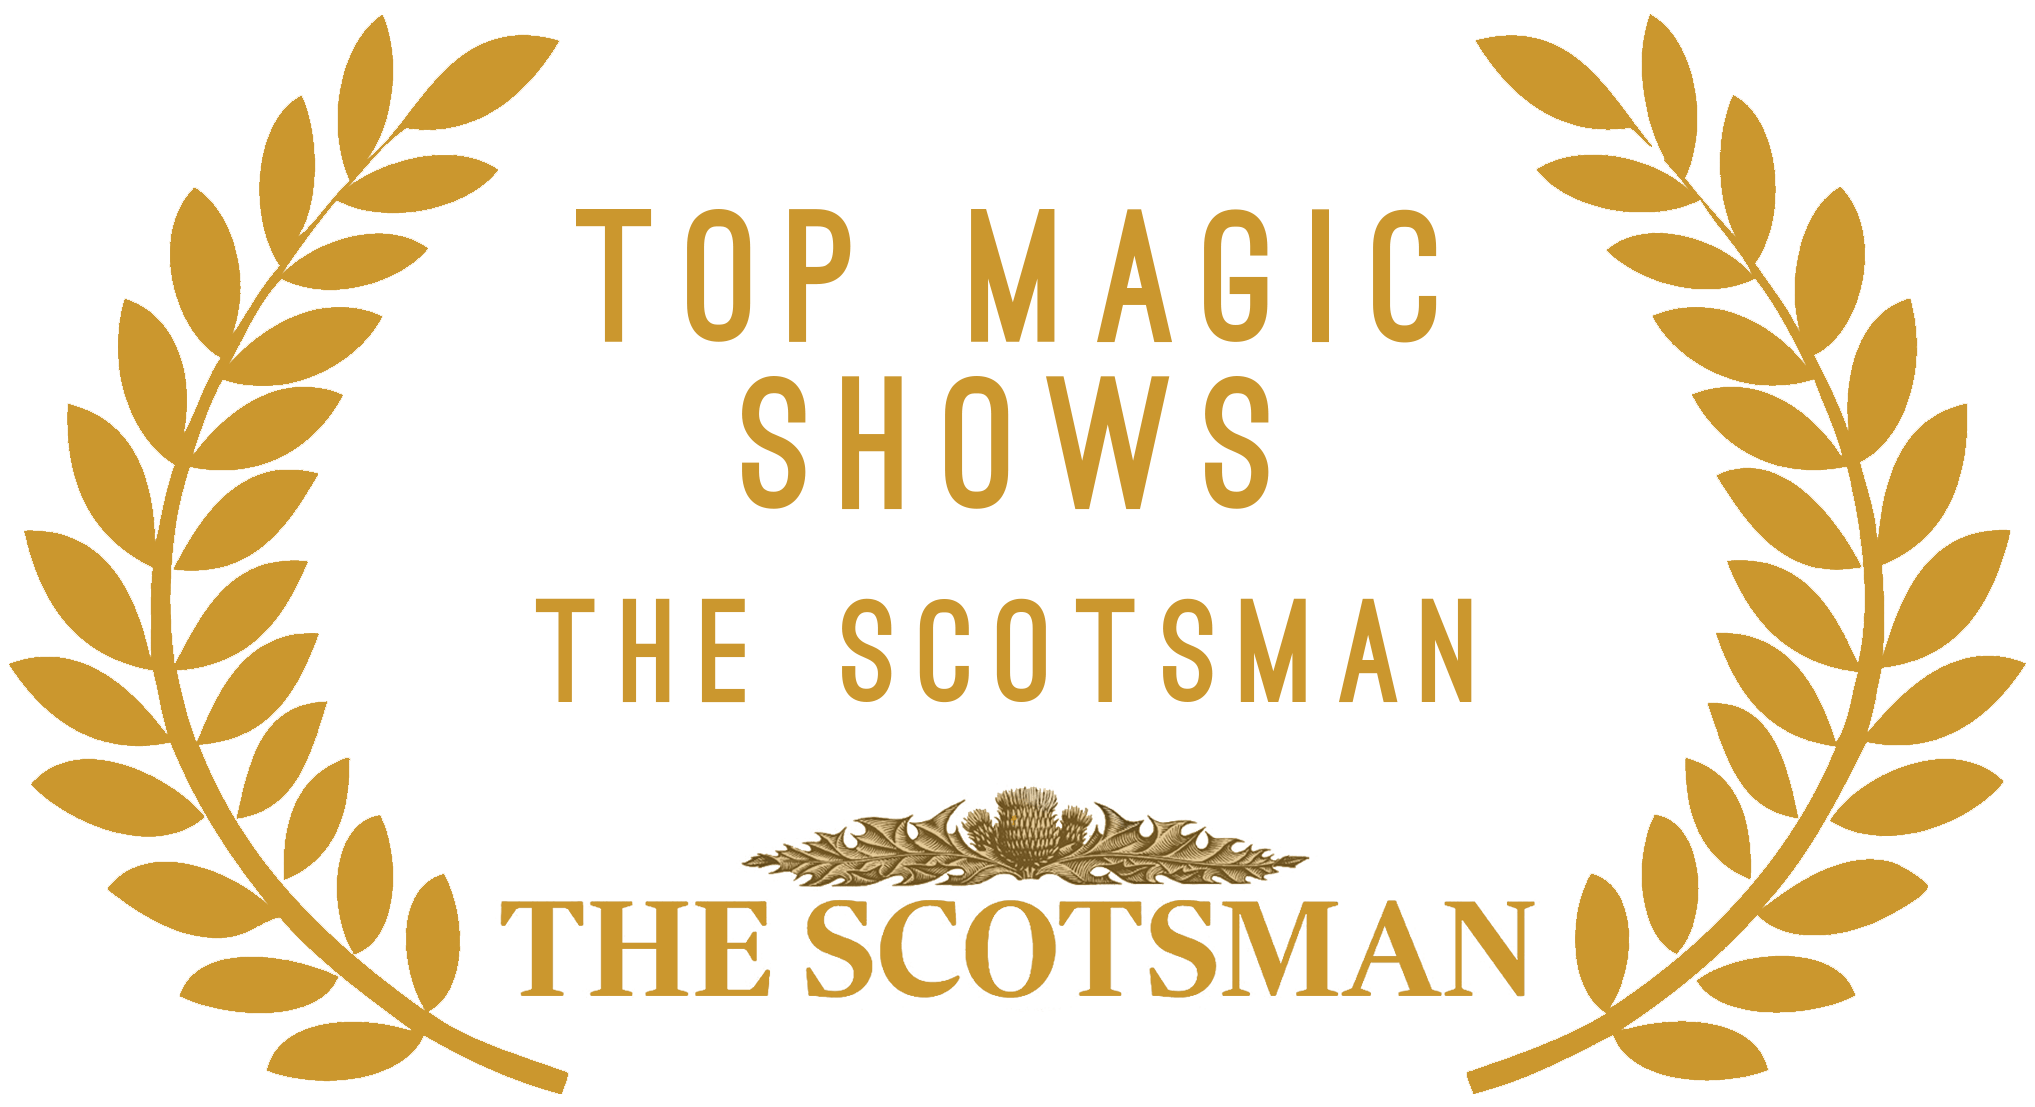 The scotsman top magic show award for Manchester magician Aaron Calvert